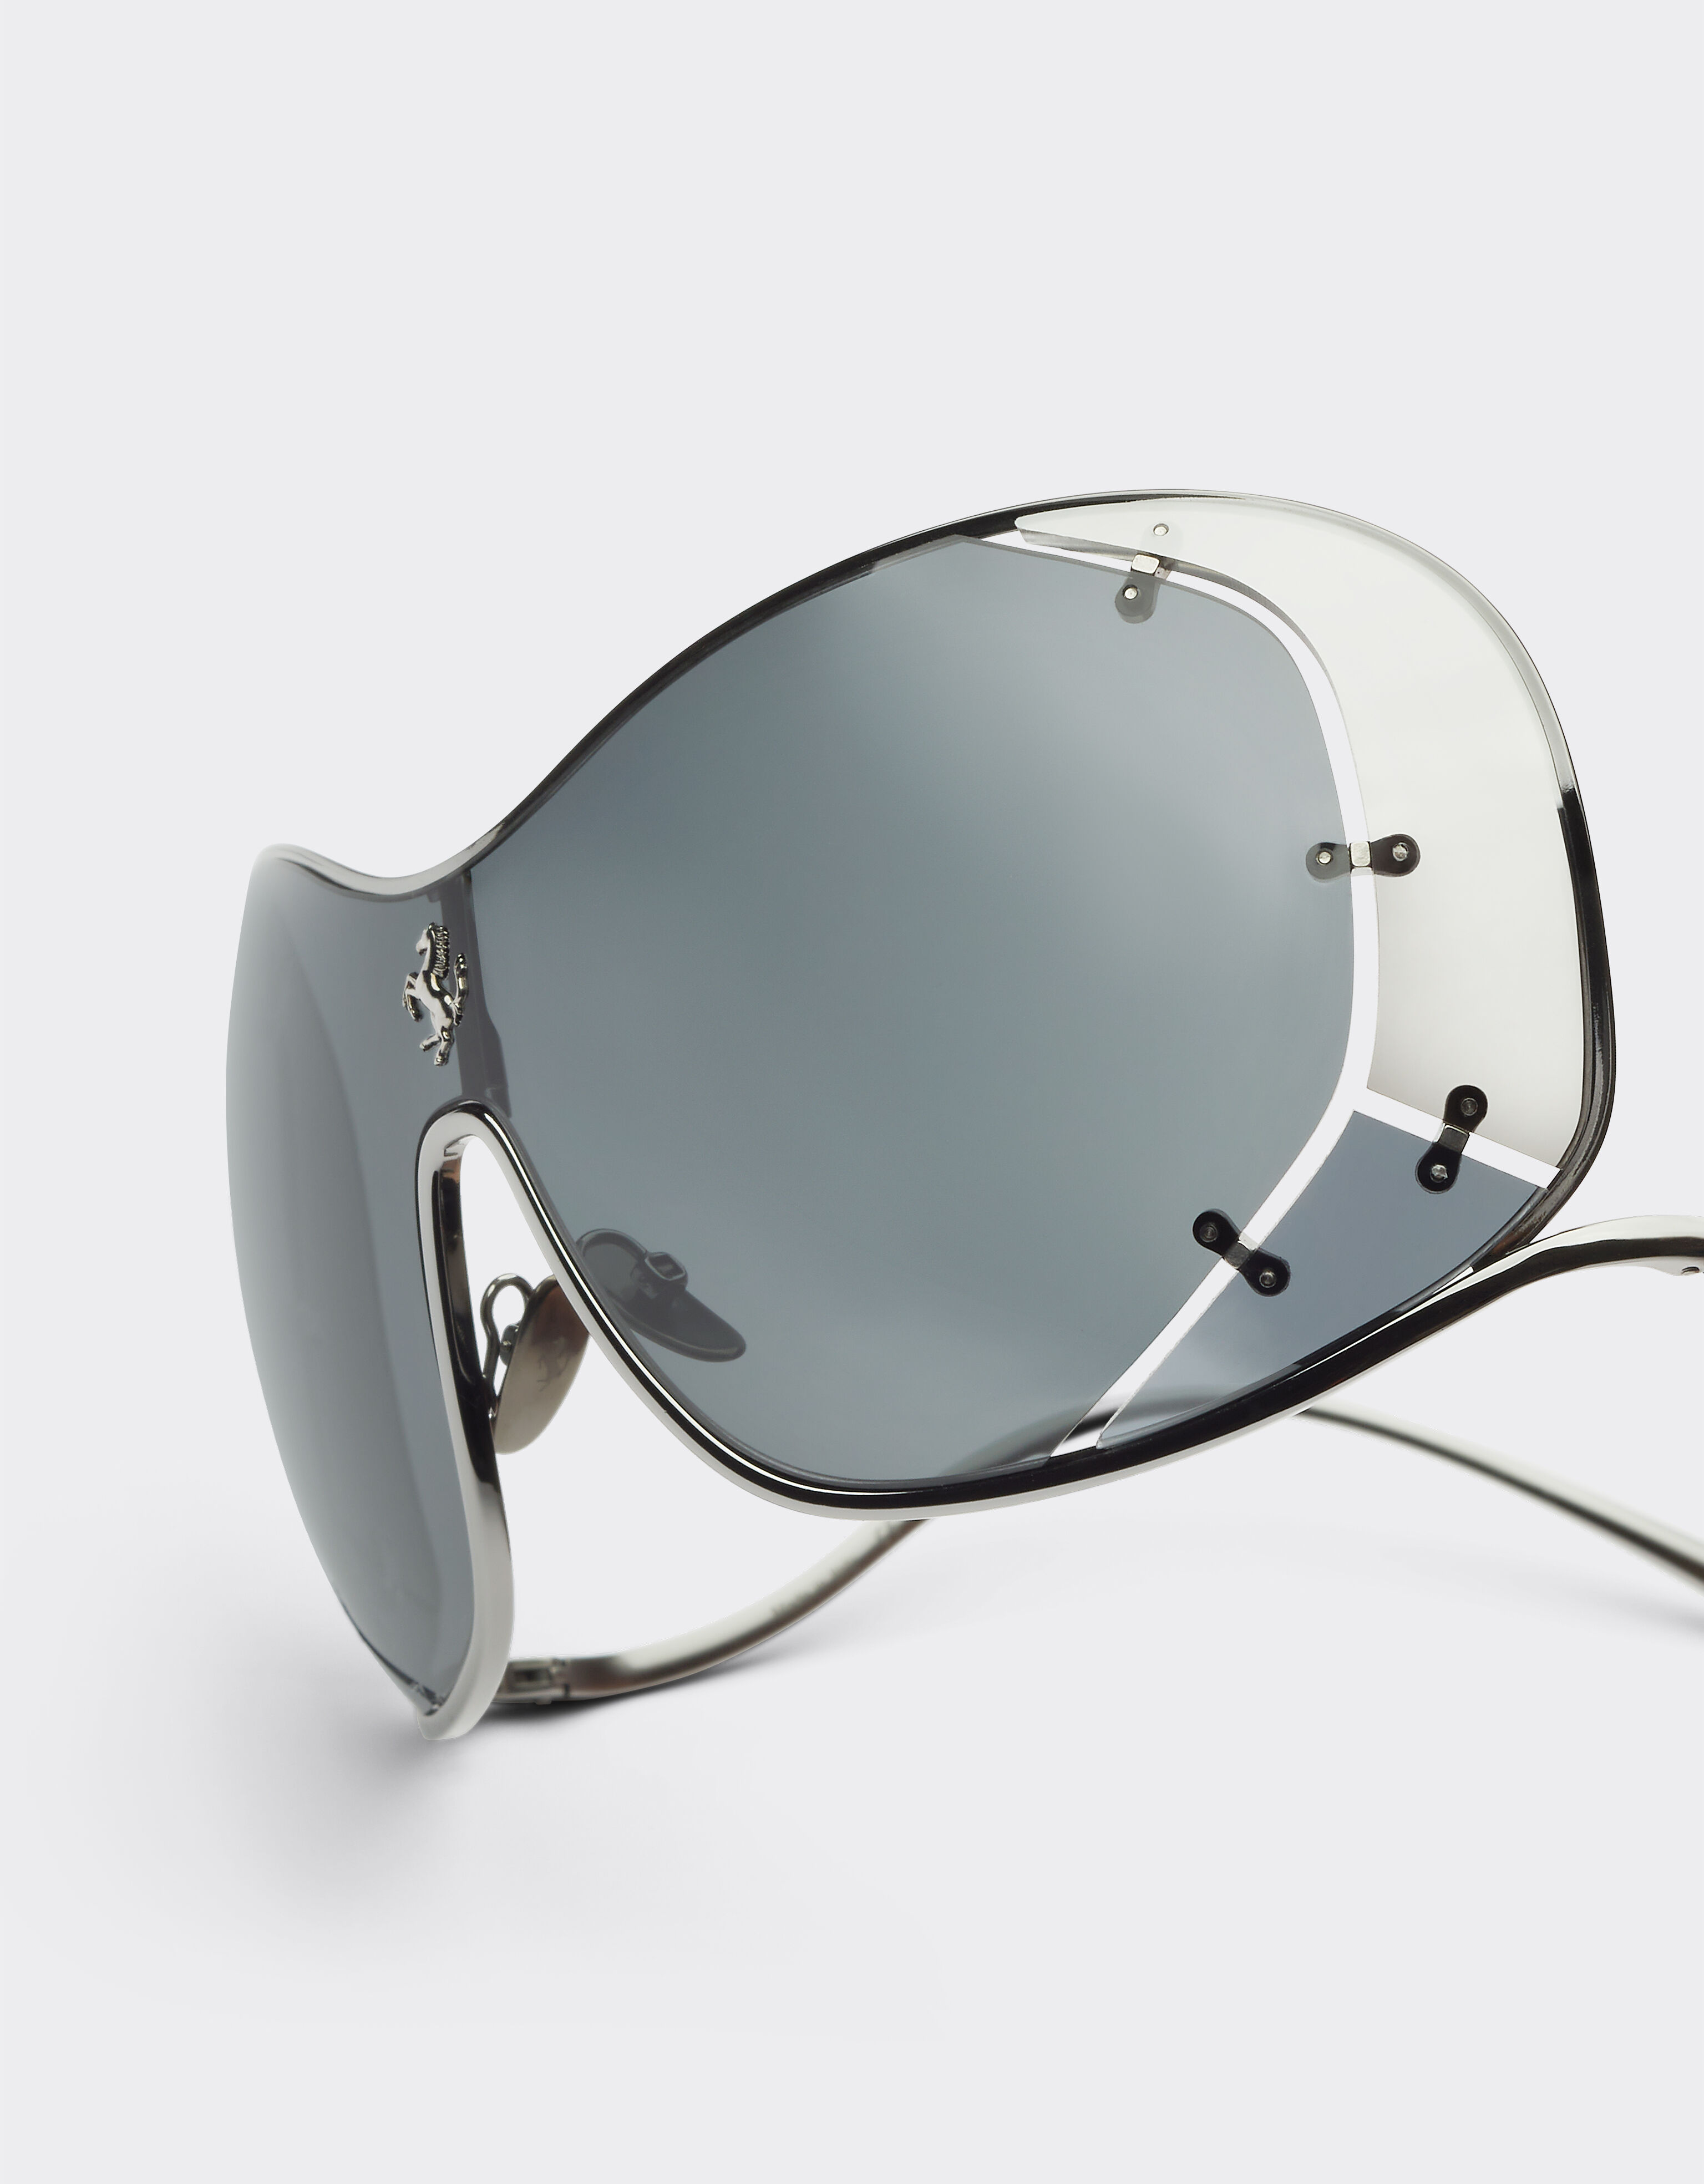 Ferrari Ferrari sunglasses with grey lenses 深灰色 F0640f